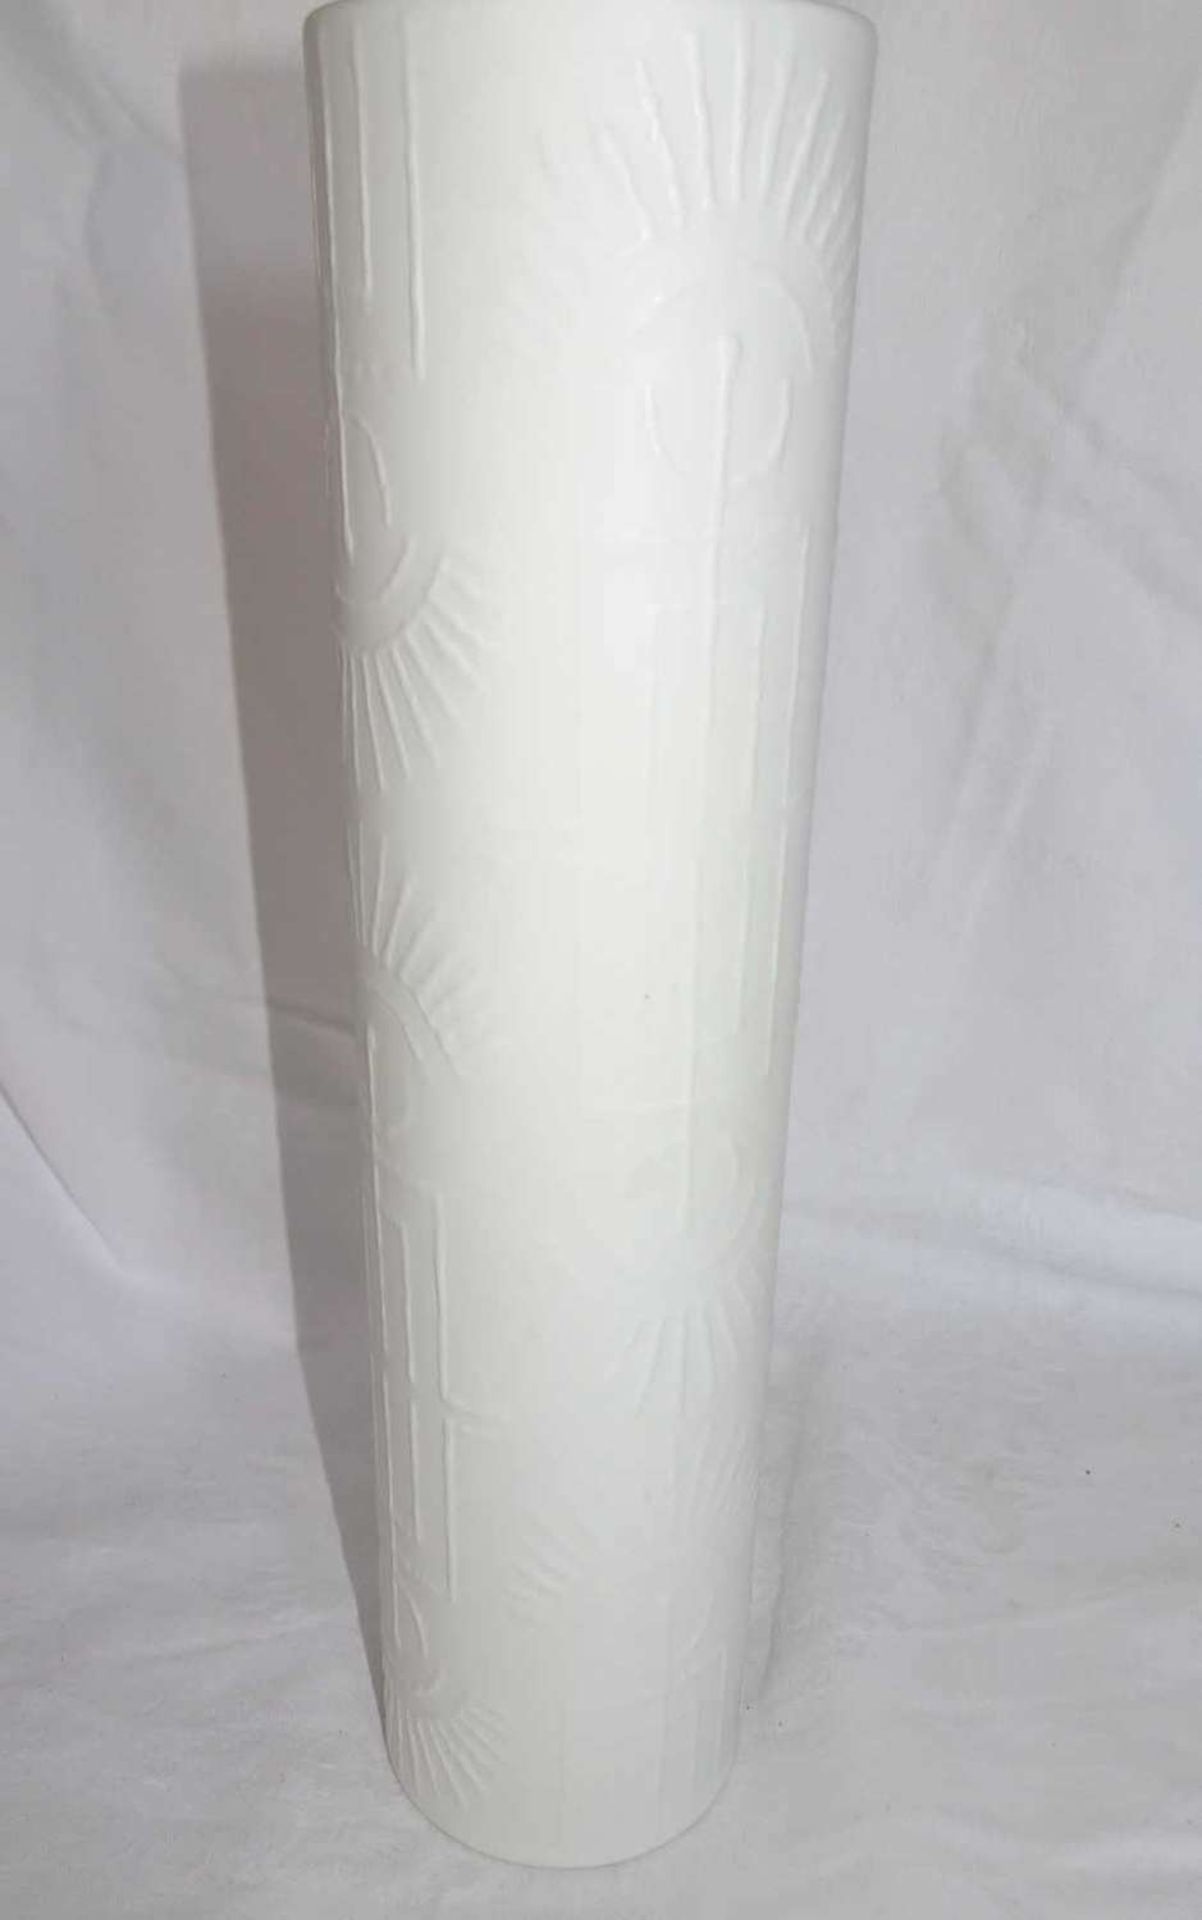 Rosenthal vase, bisque porcelain, Studio Line, white porcelain. Height about 29.8 cm. Good